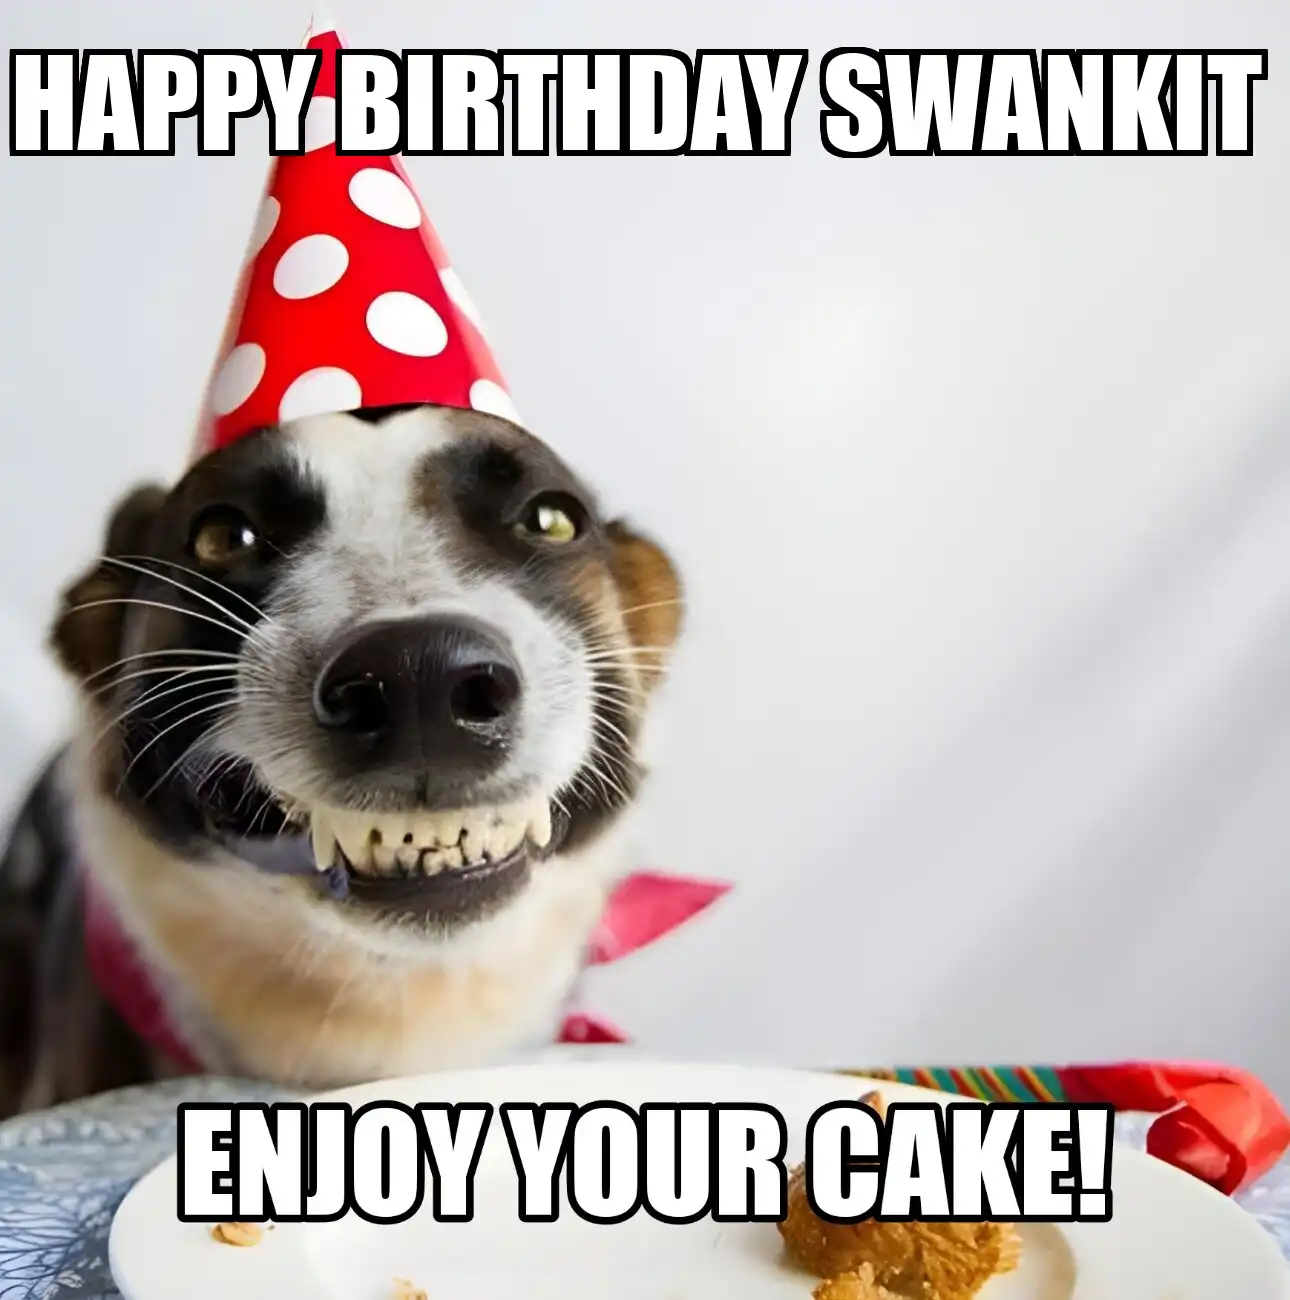 Happy Birthday Swankit Enjoy Your Cake Dog Meme